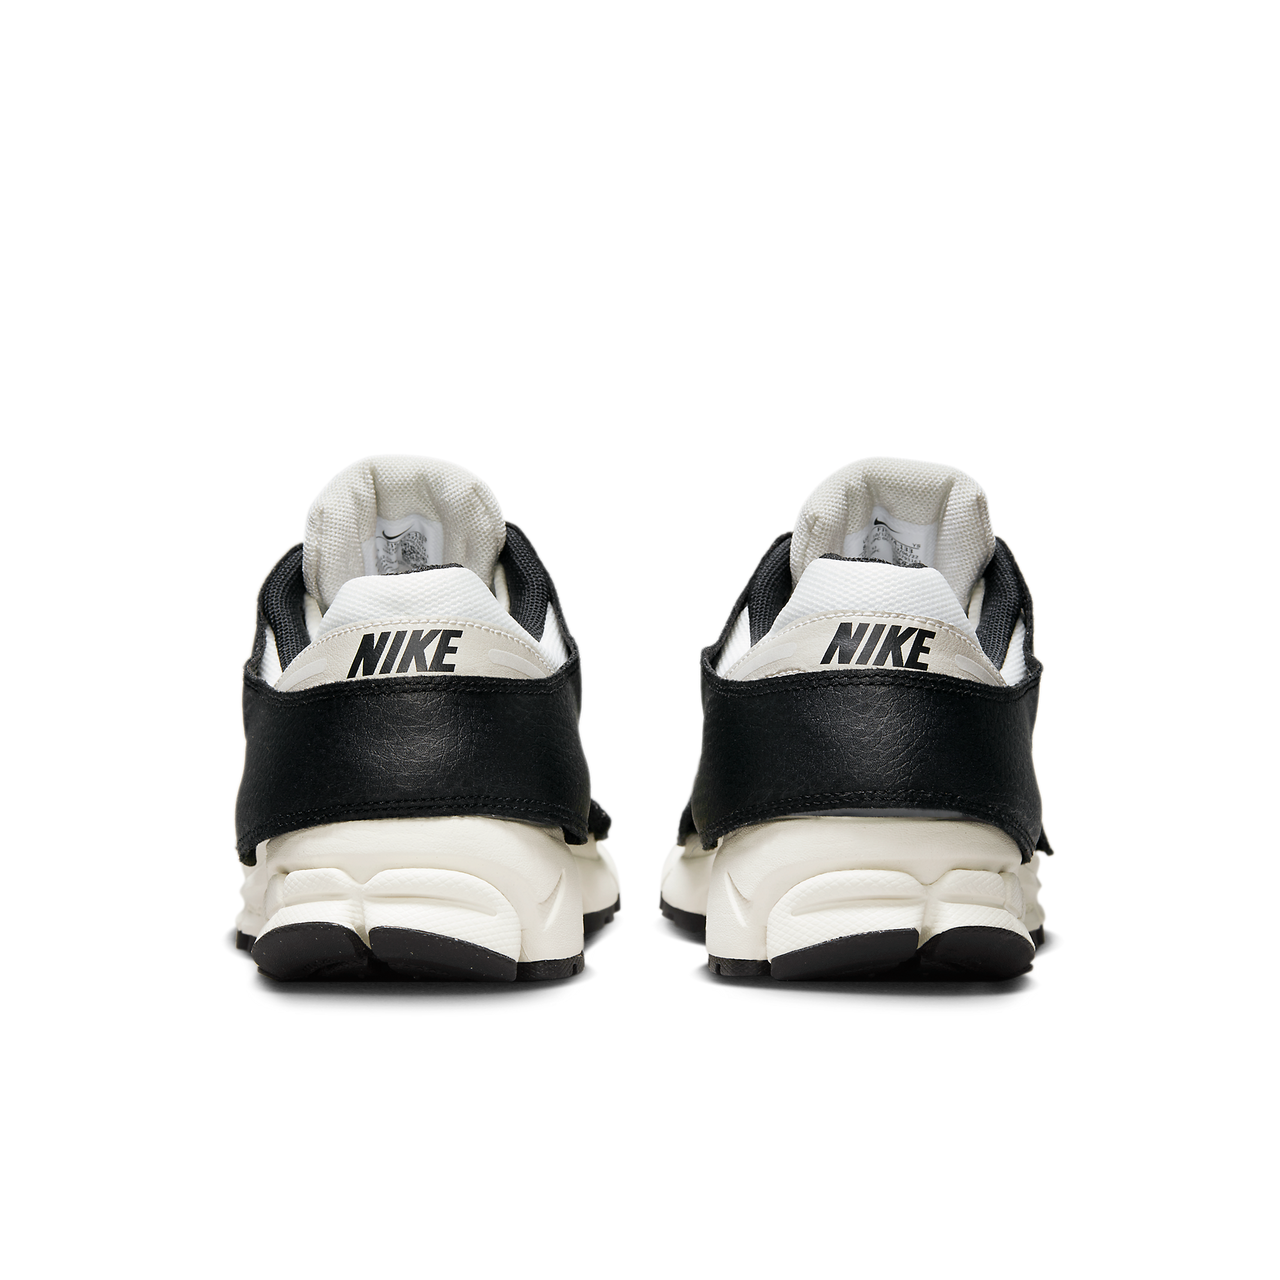 The Nike Zoom Vomero 5 ‘Timeless’ Is Full of Surprises - Sneaker Freaker